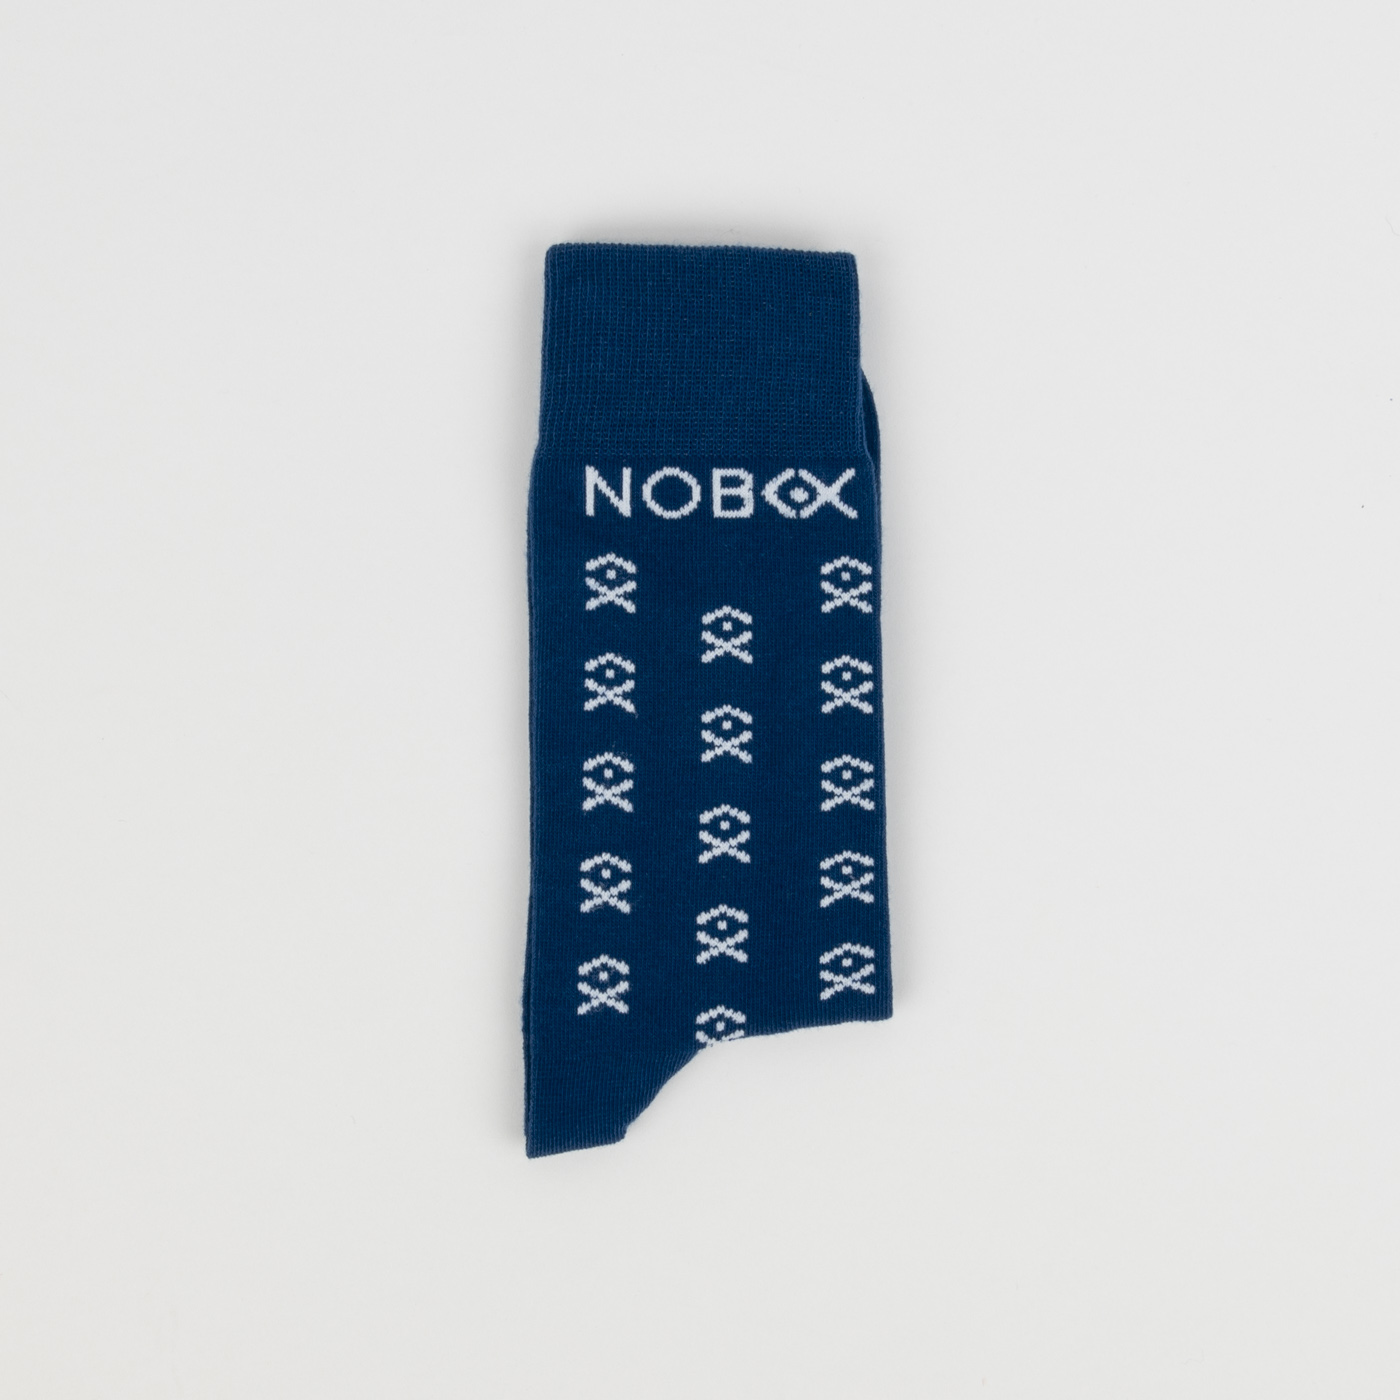 Nobix